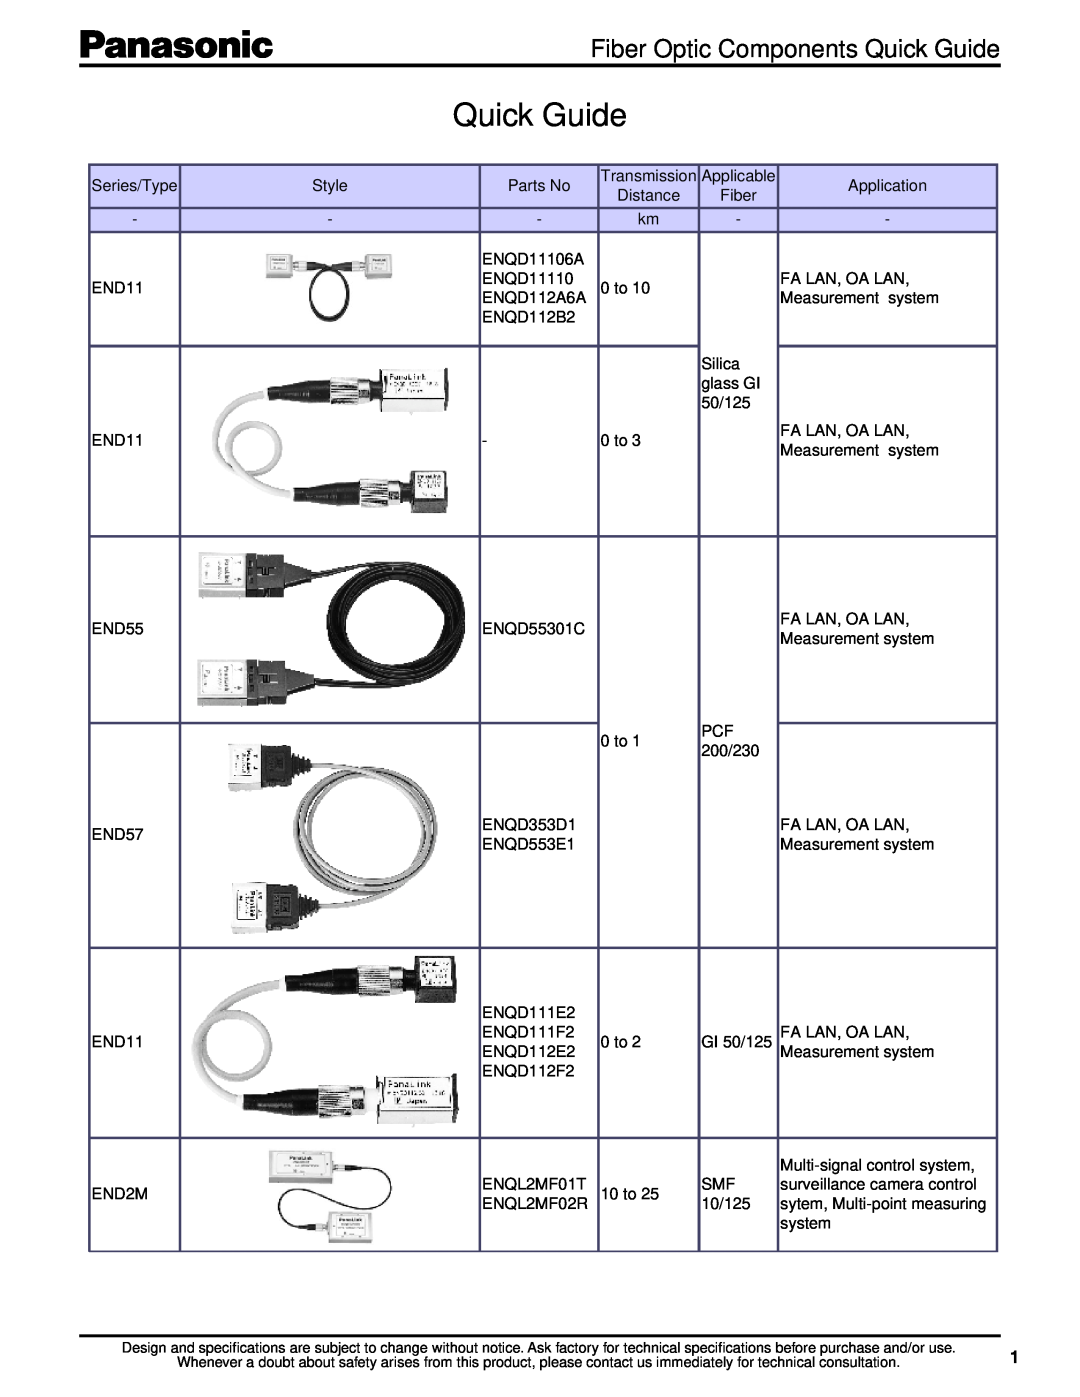 Panasonic ENQD112B2, ENQD112A6A, ENQD11106A, END11, ENQD11110 specifications Fiber Optic Components Quick Guide 